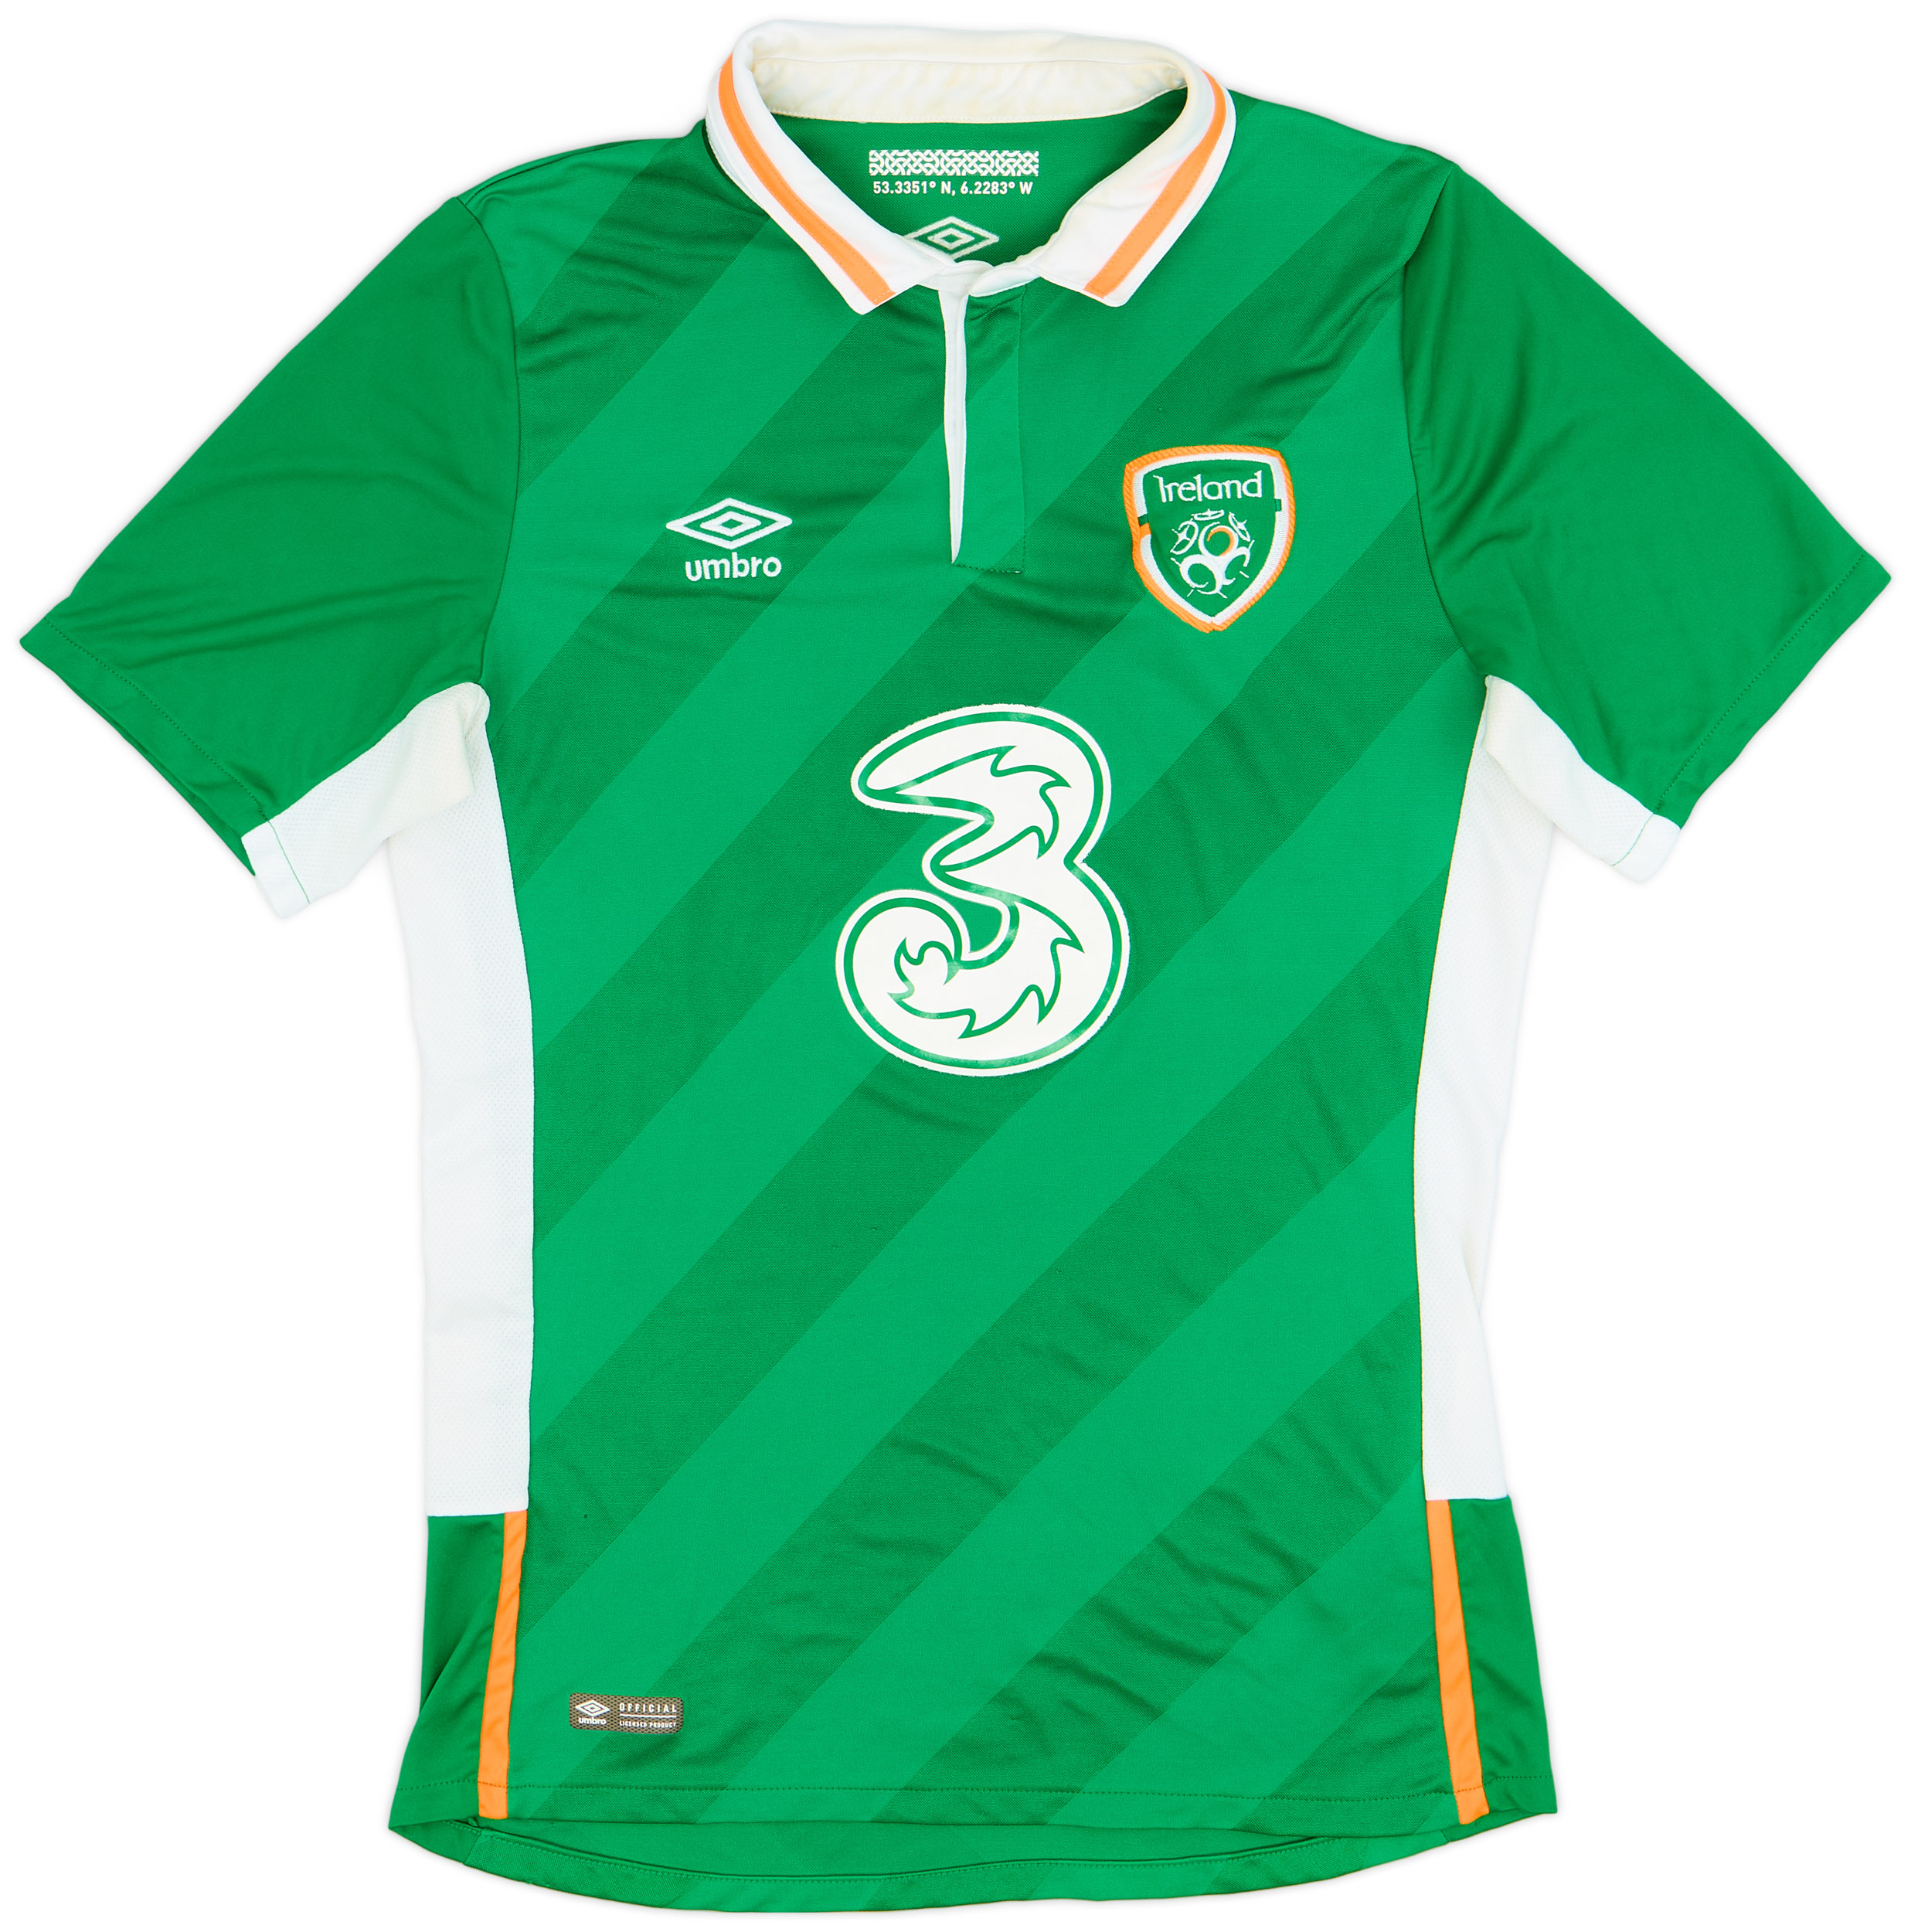 2016-17 Republic of Ireland Home Shirt - 7/10 - ()